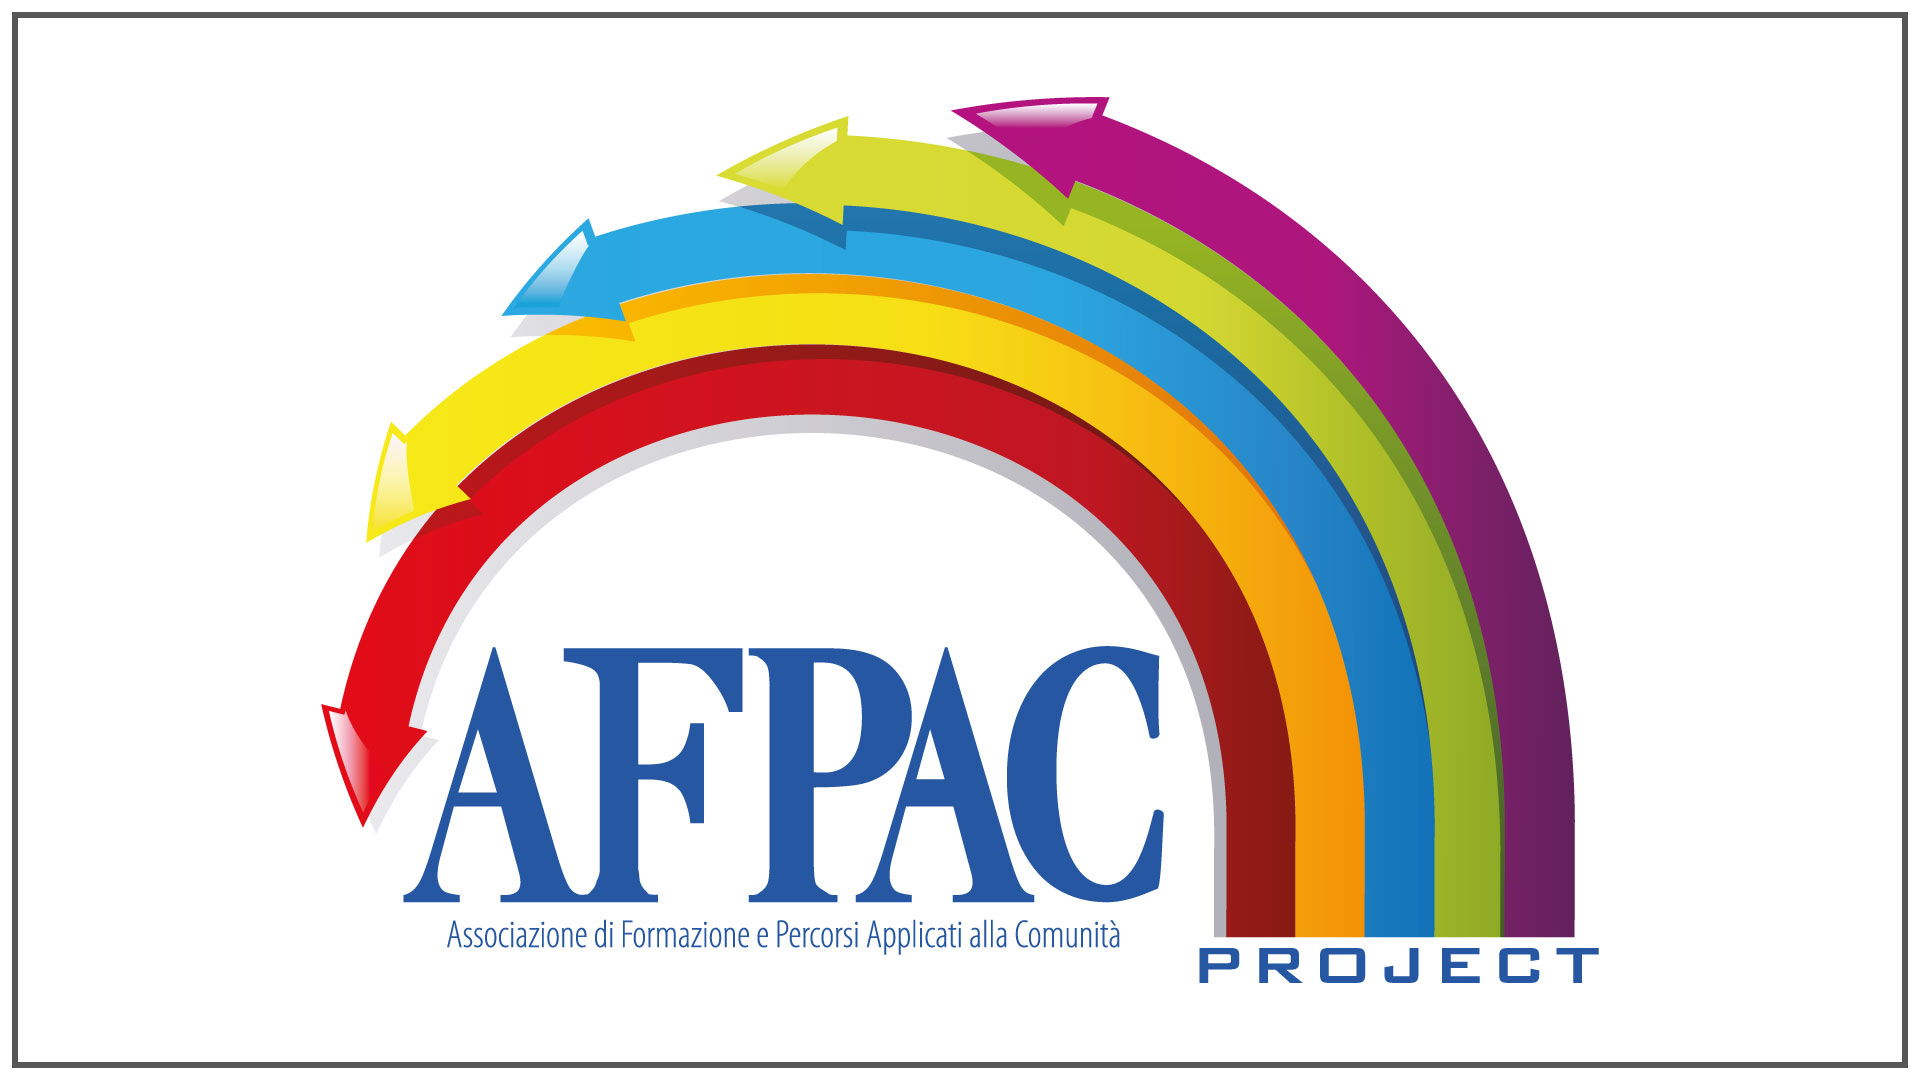 promediart_portfolio_logo-design_AFPAC